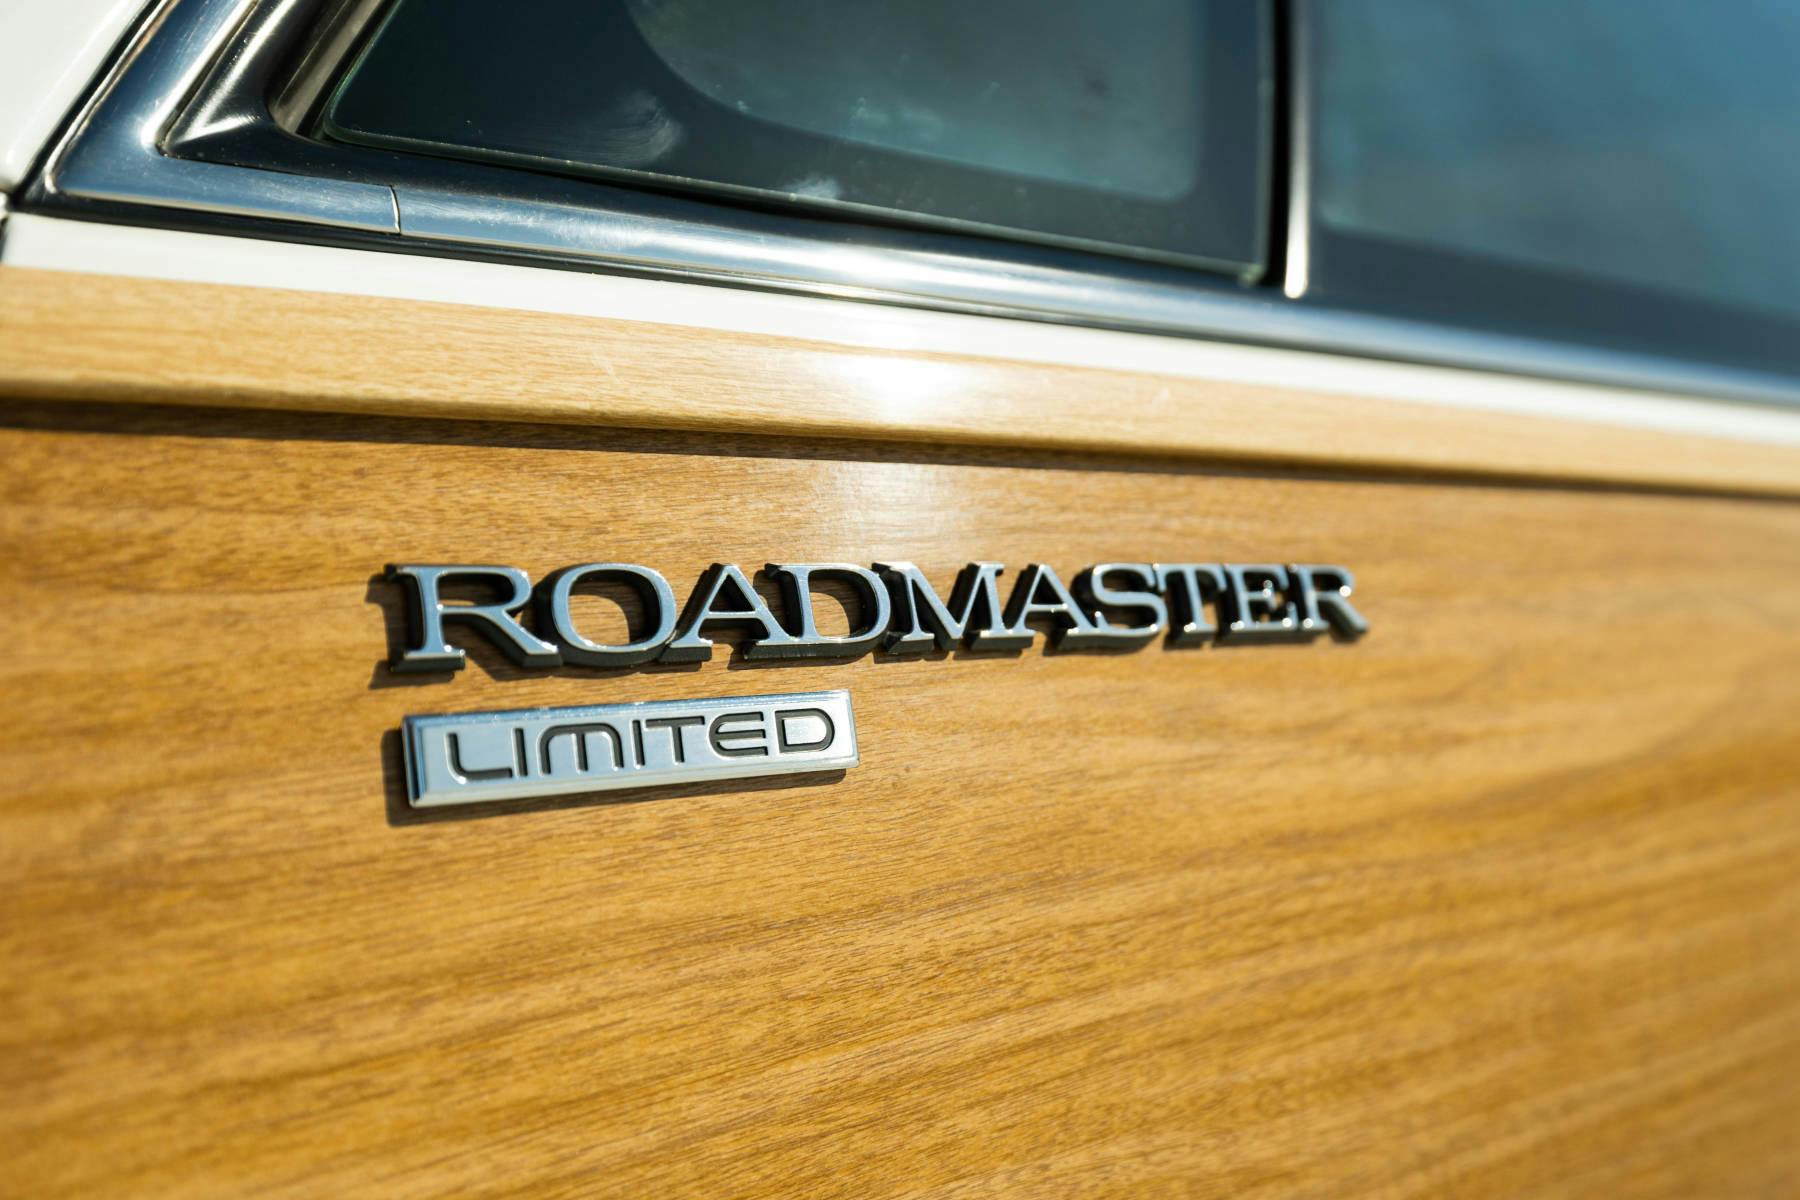 1996 Buick Roadmaster Estate Wagon limited badge